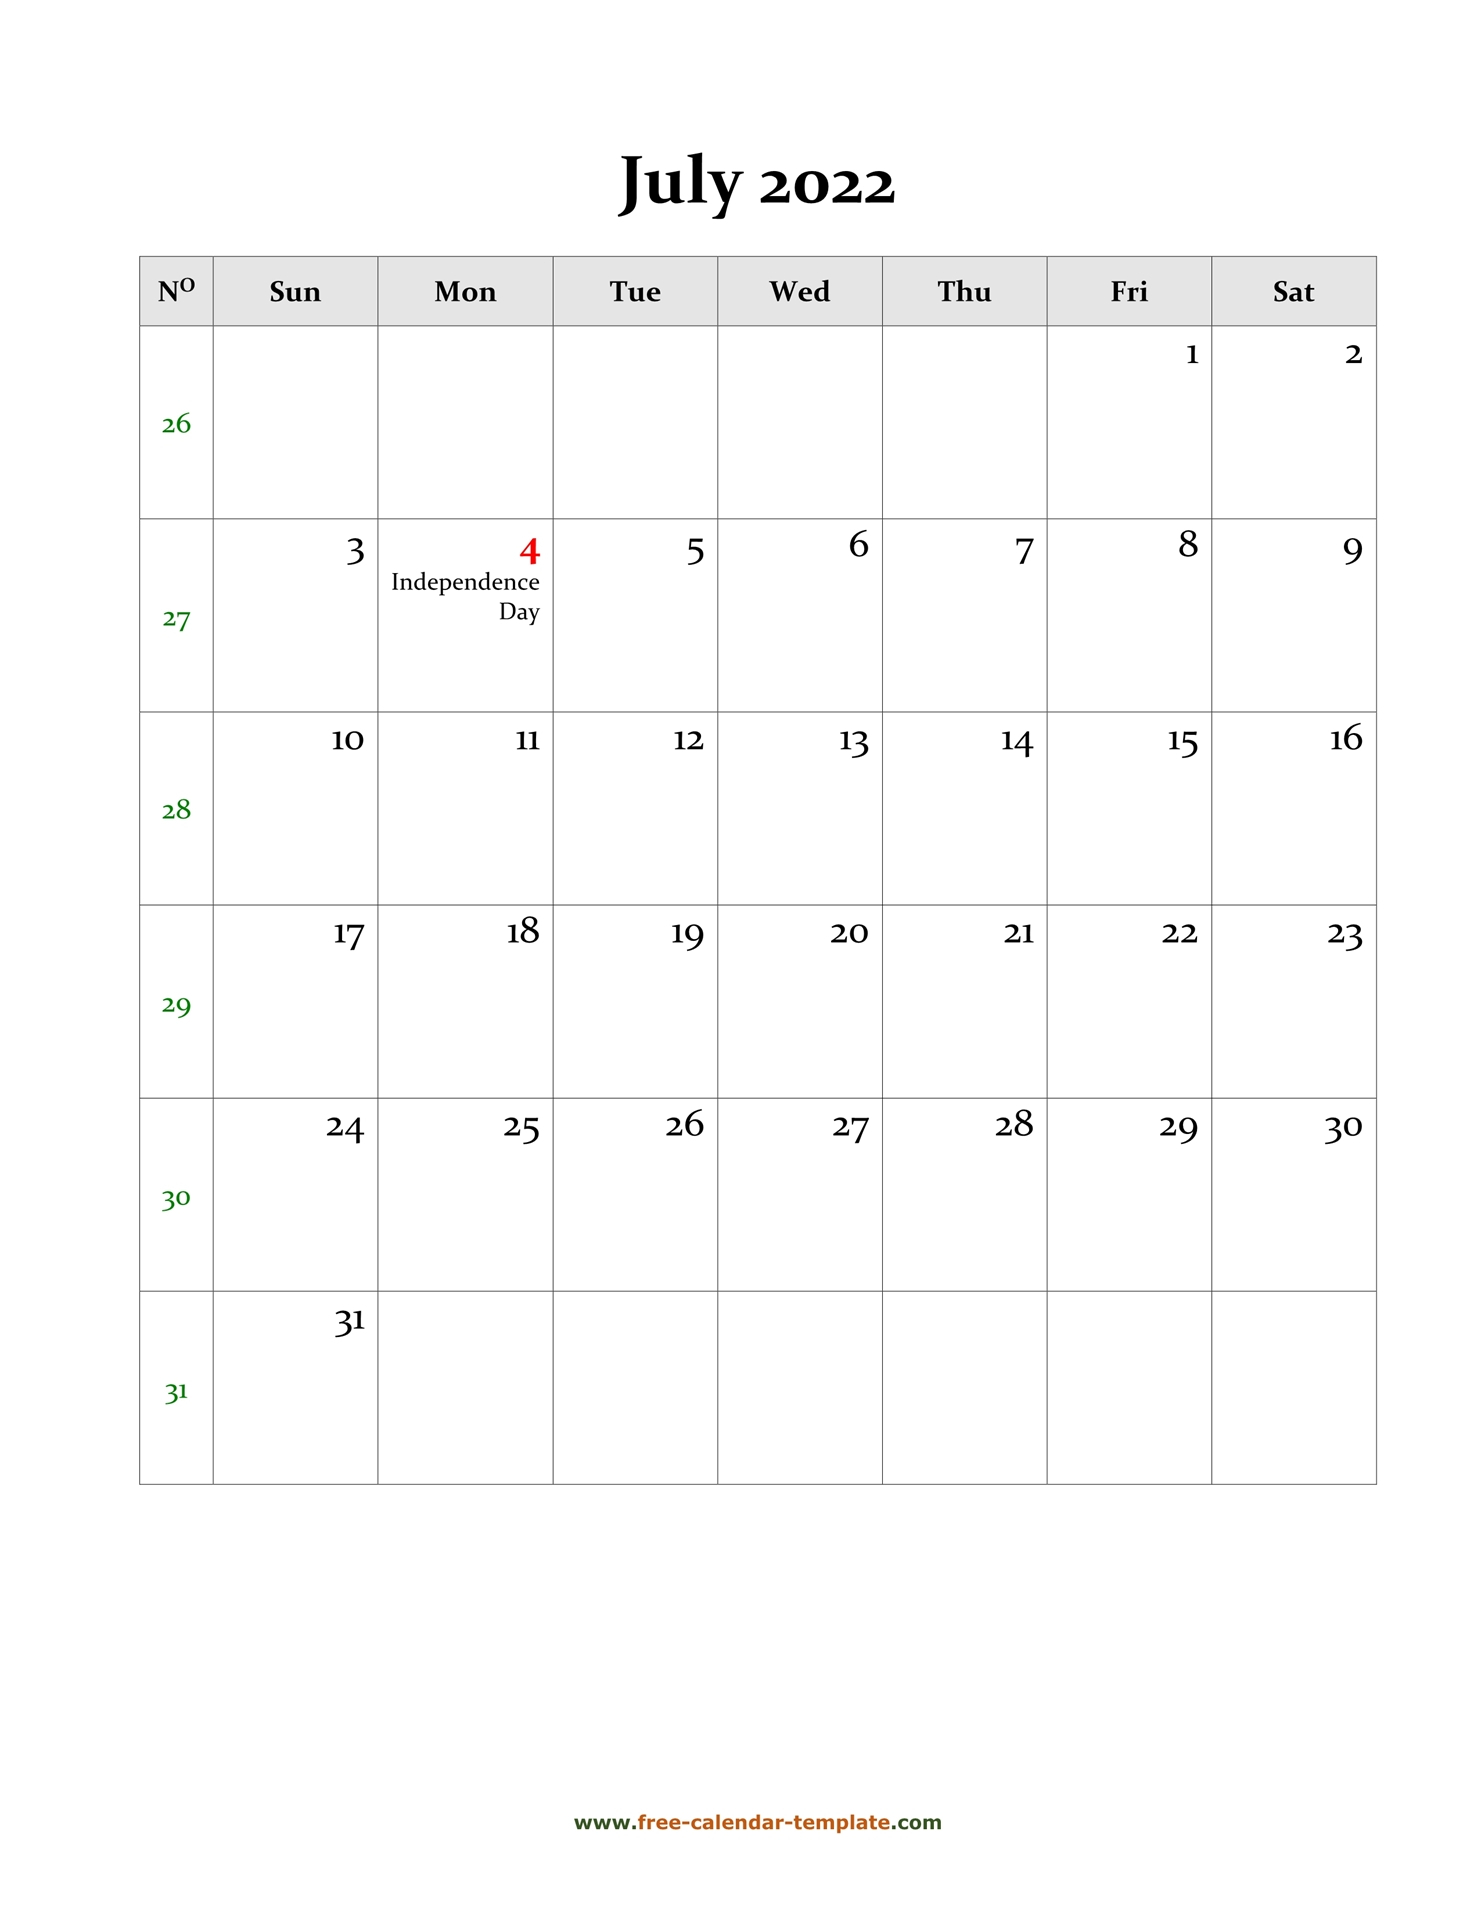 2022 July Calendar (Blank Vertical Template) | Free